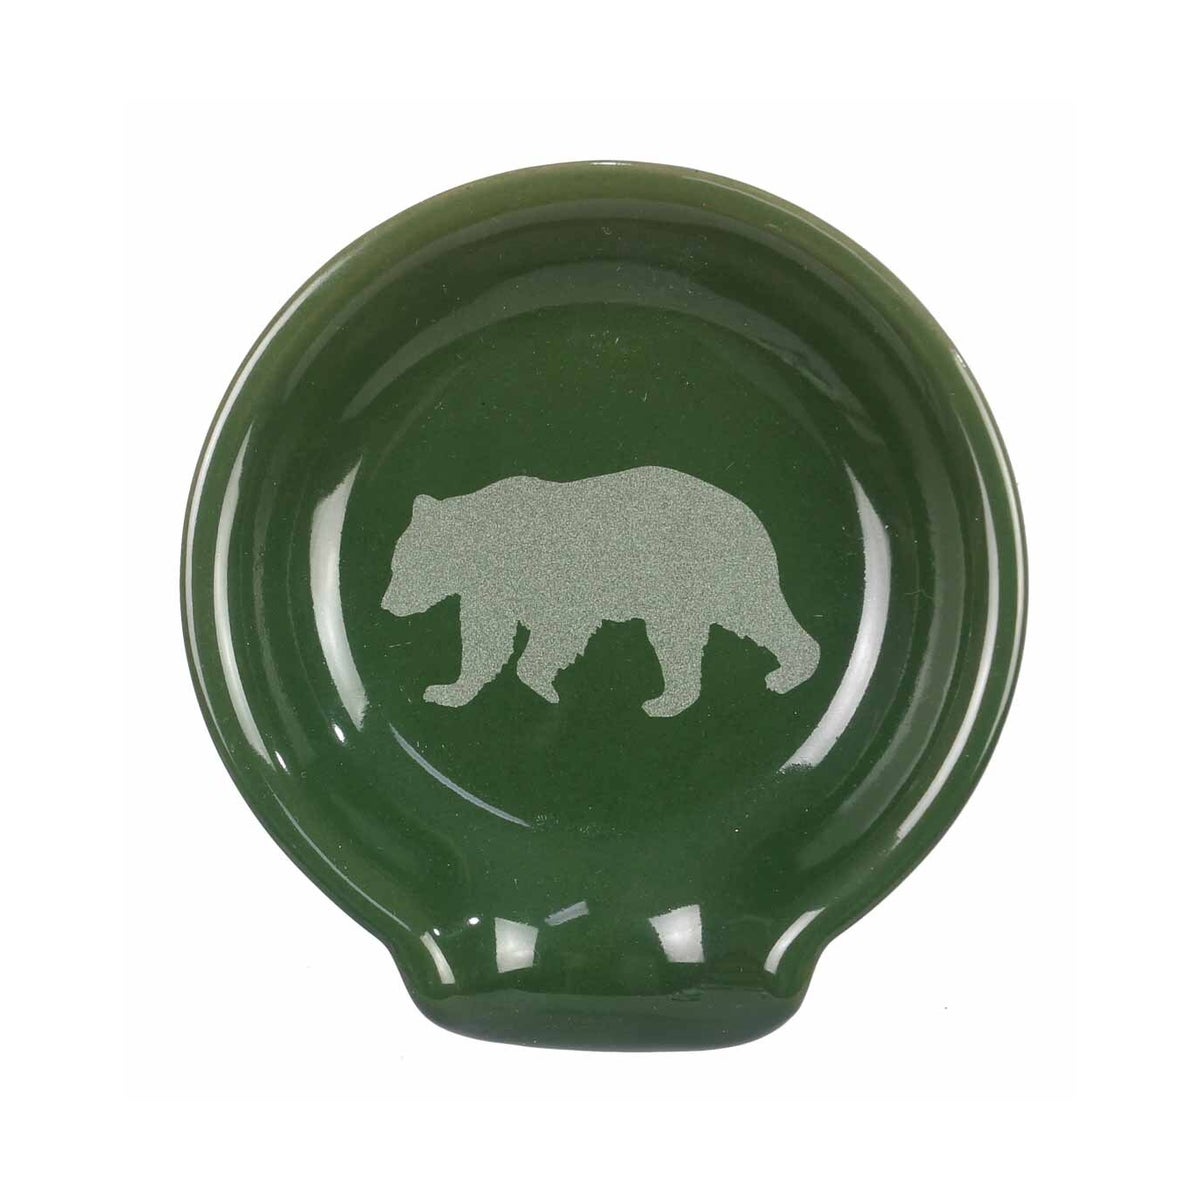 Ceramic Spoon Rest with Bear Design